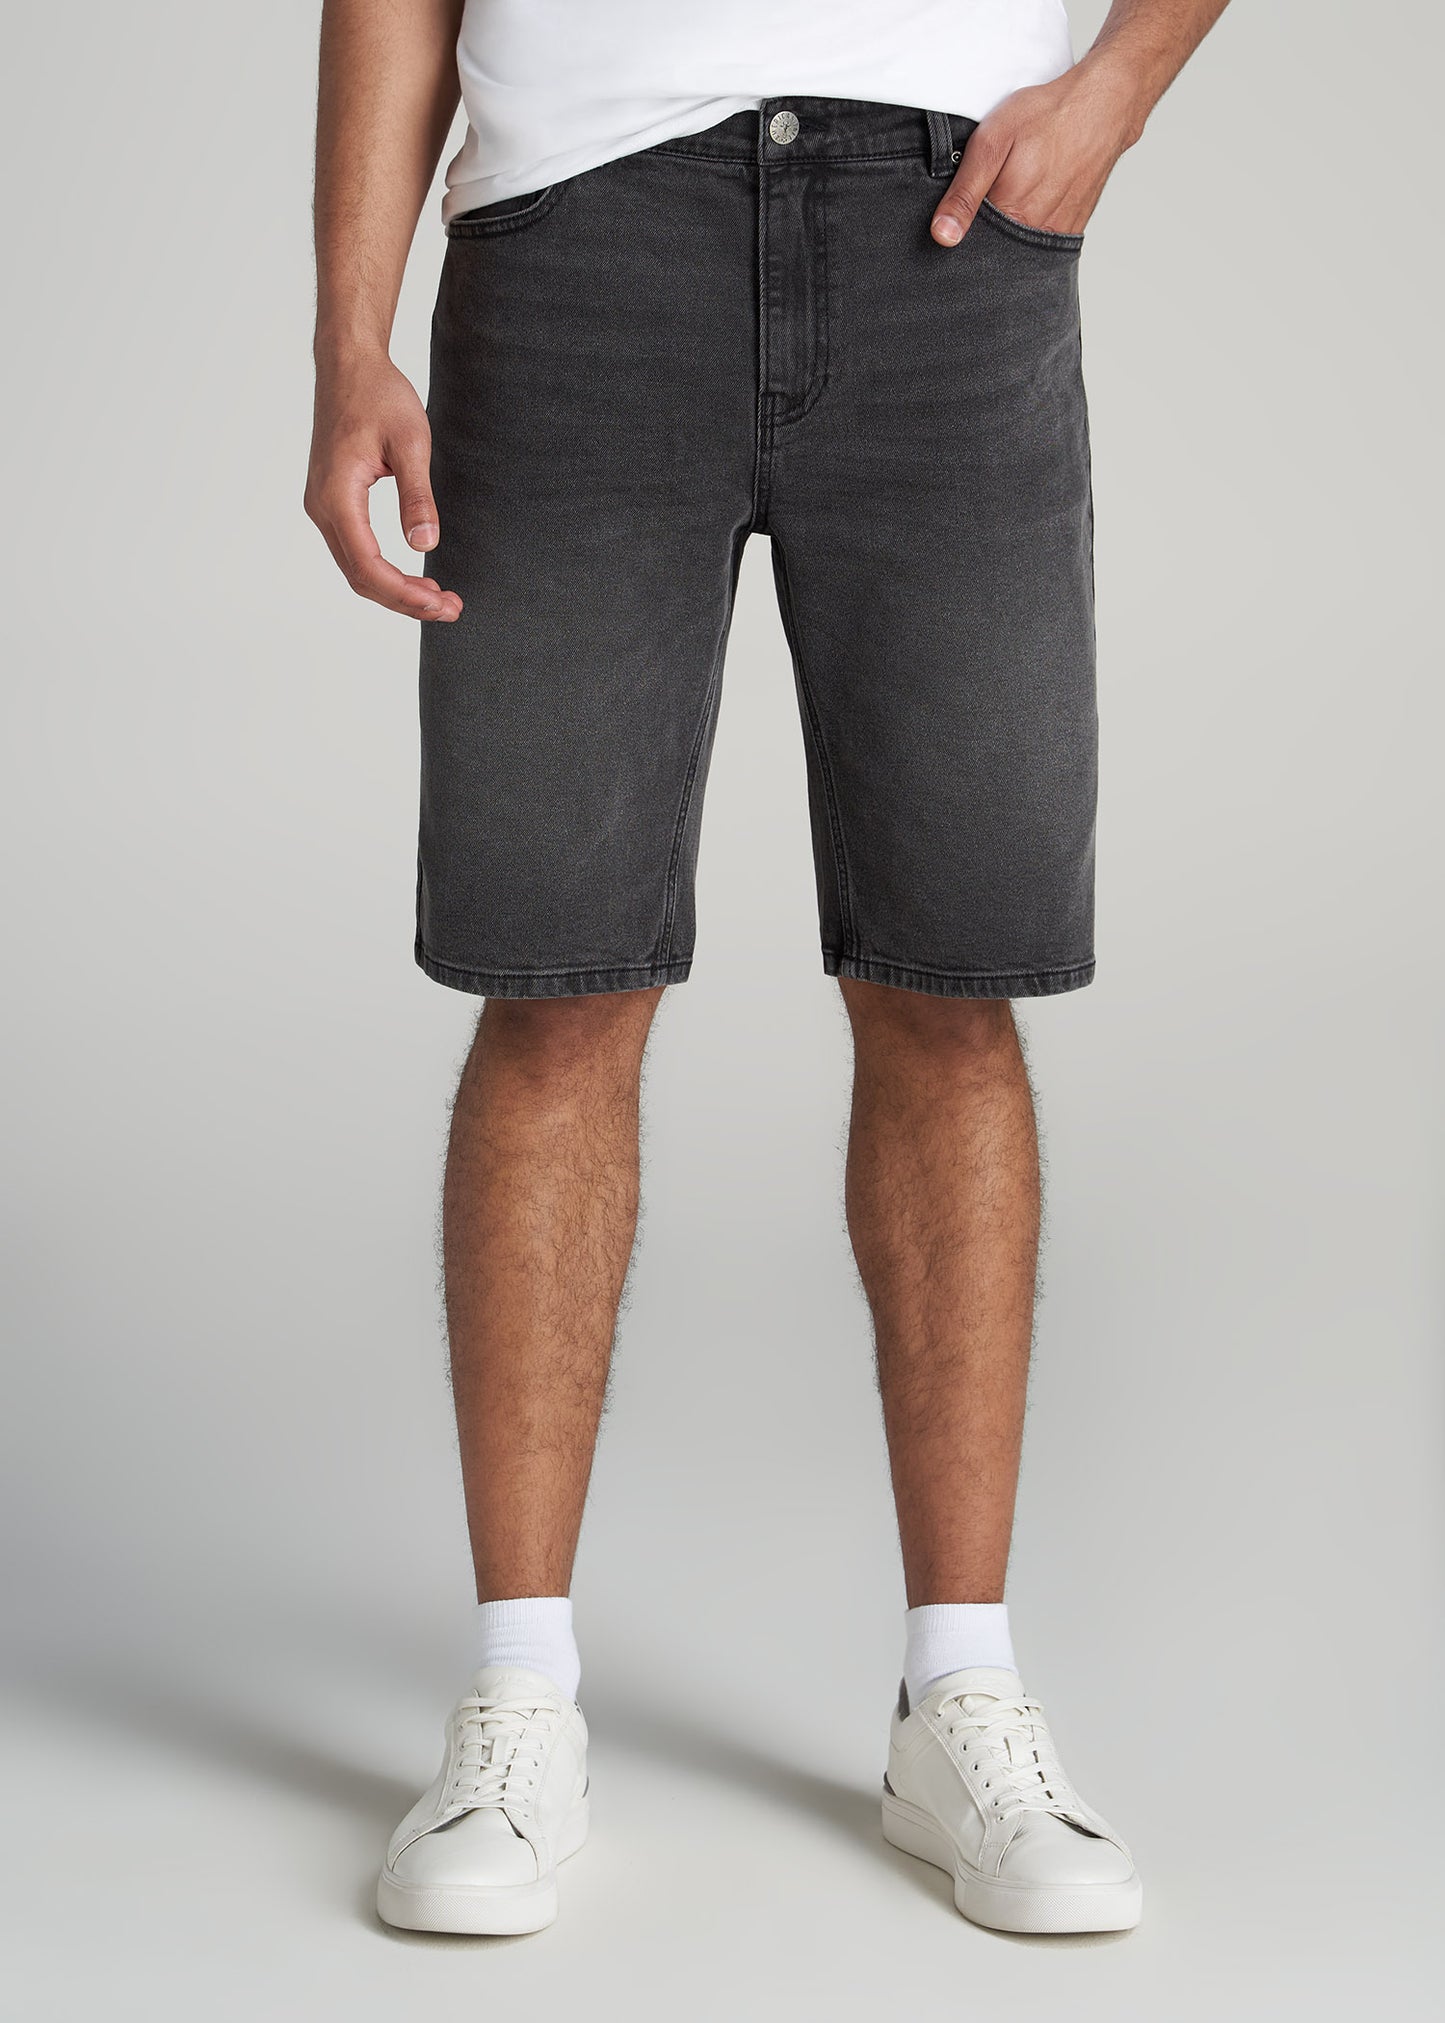    American-Tall-Men-Denim-Shorts-Vintage-Faded-Black-front